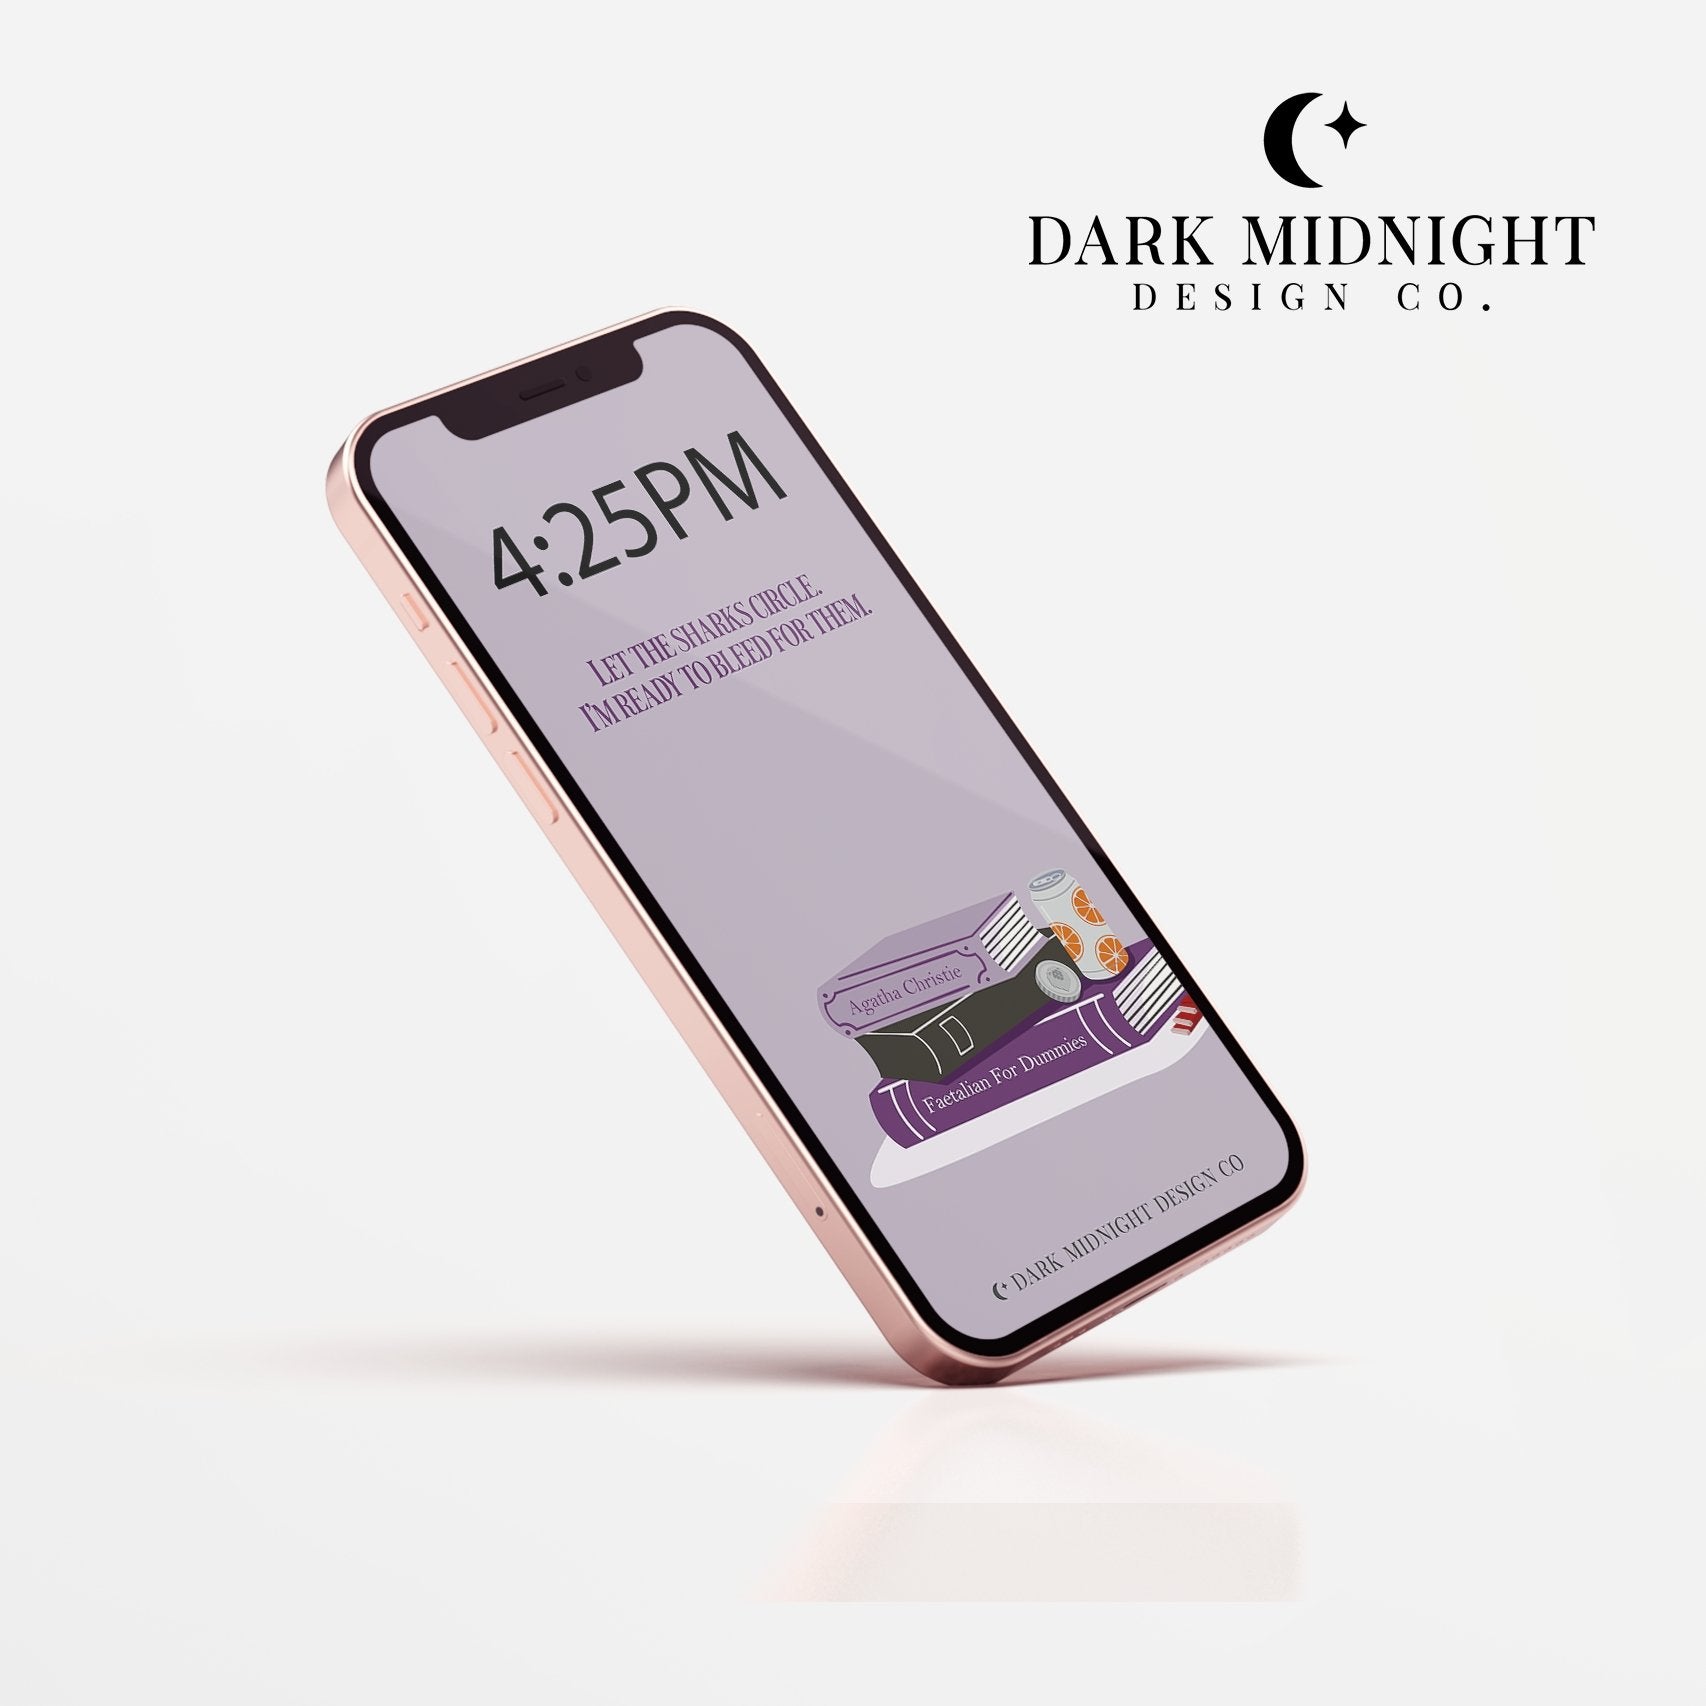 Character Anthology Phone Wallpaper - Elise Castillo - Officially Licensed Ruthless Boys of the Zodiac Phone Wallpaper - Dark Midnight Design Co